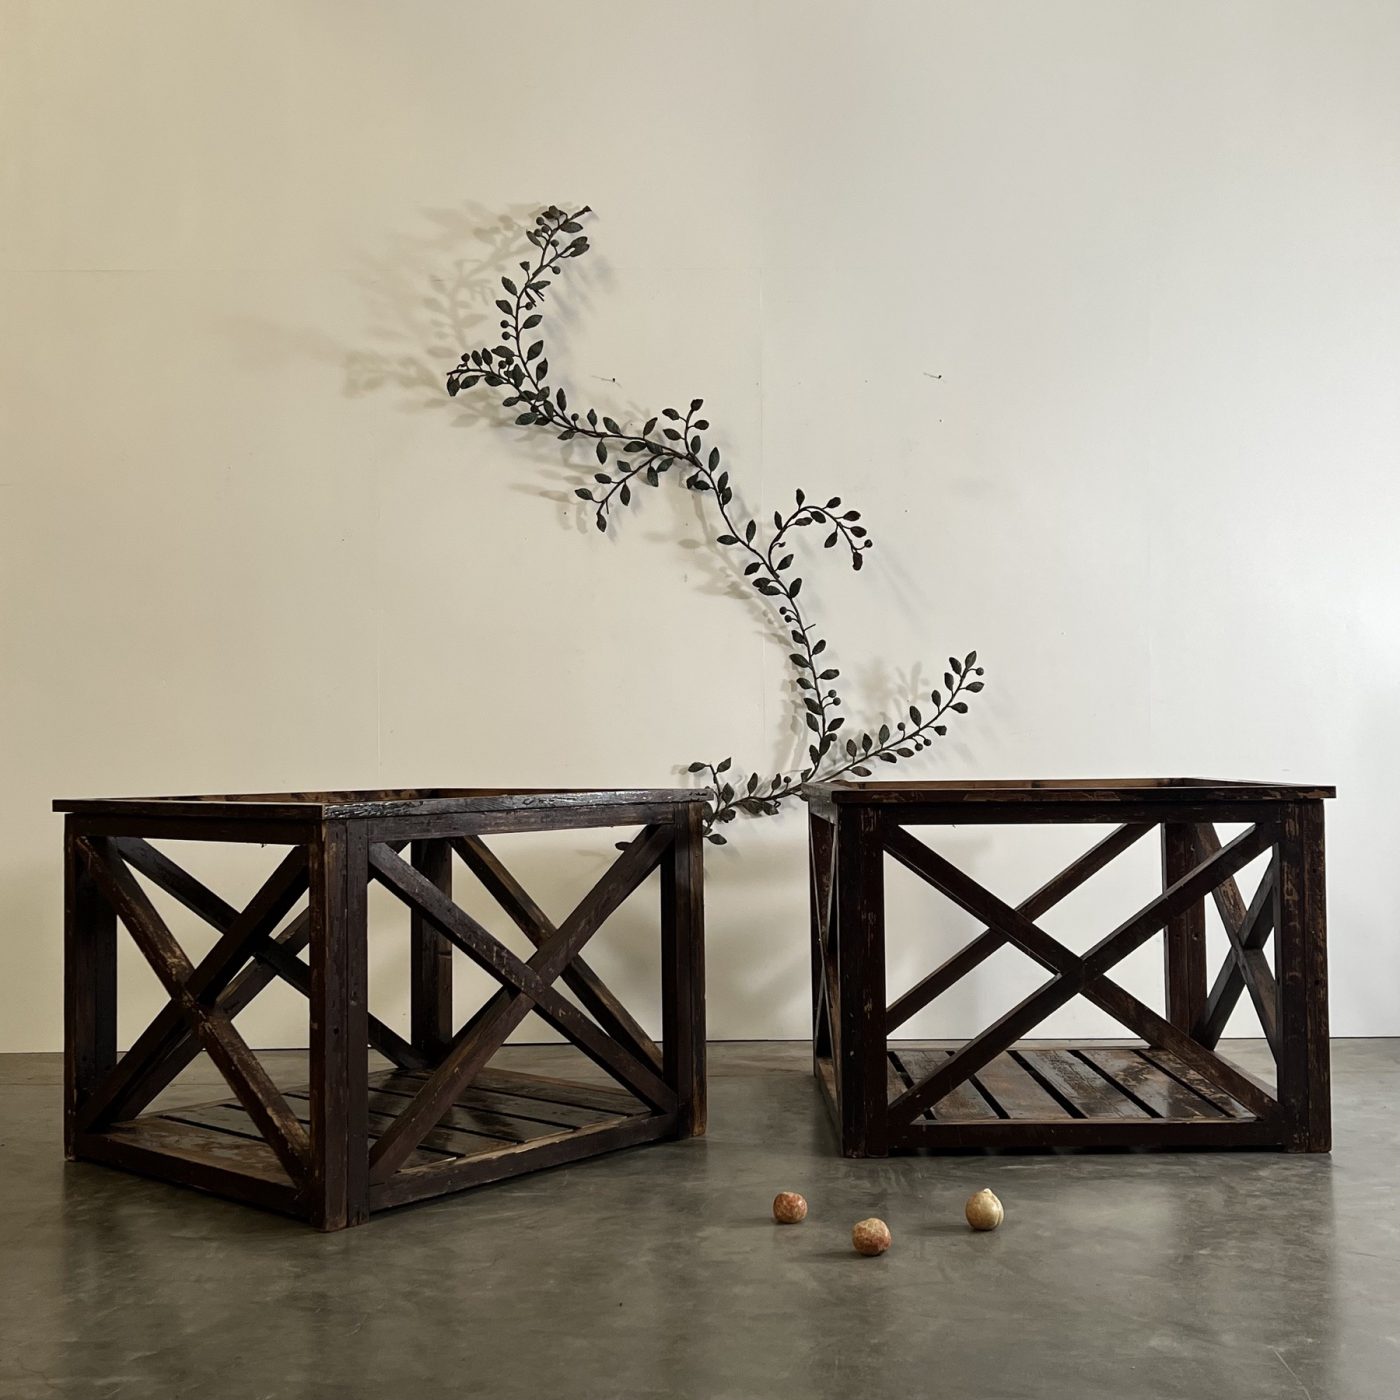 objet-vagabond-wooden-planters0008